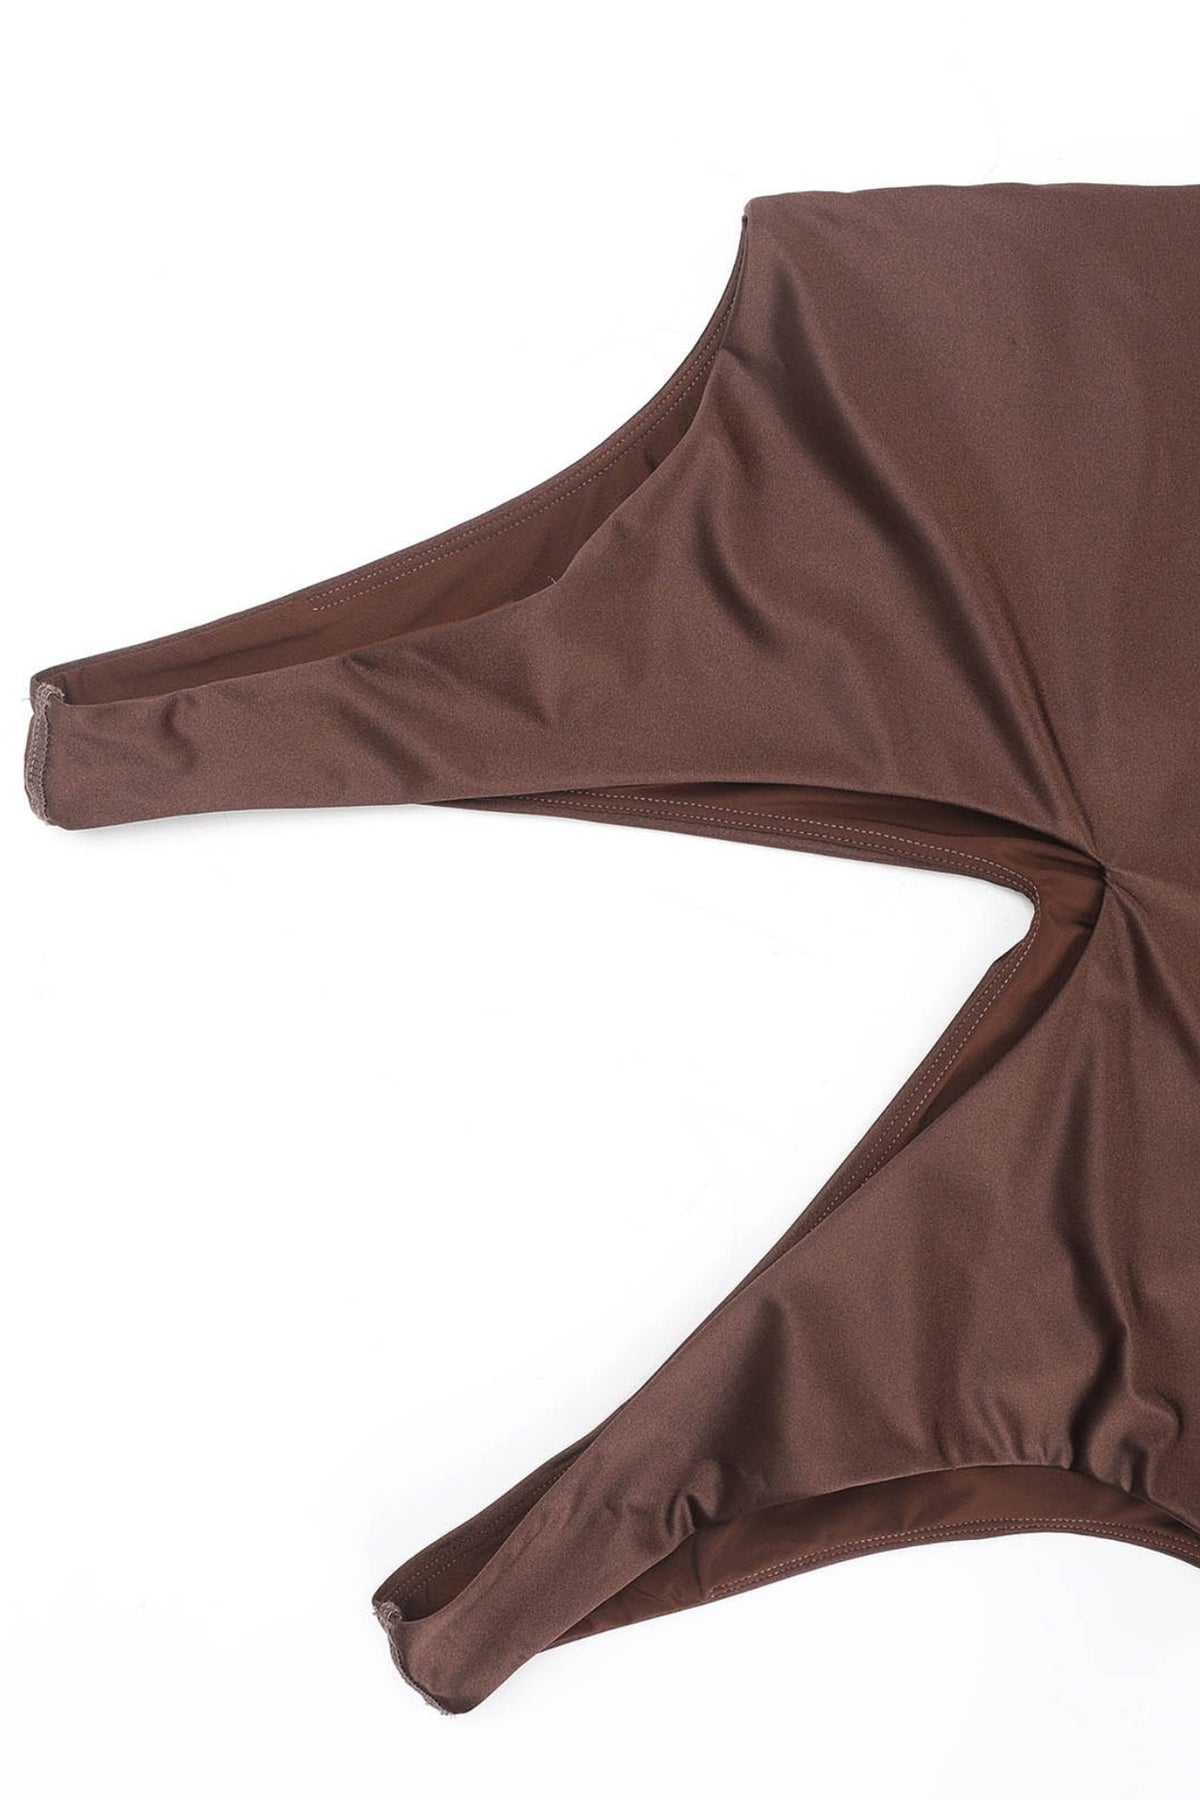 Luxe Satin Shaping Bodysuit - Mocha Contour Clothing